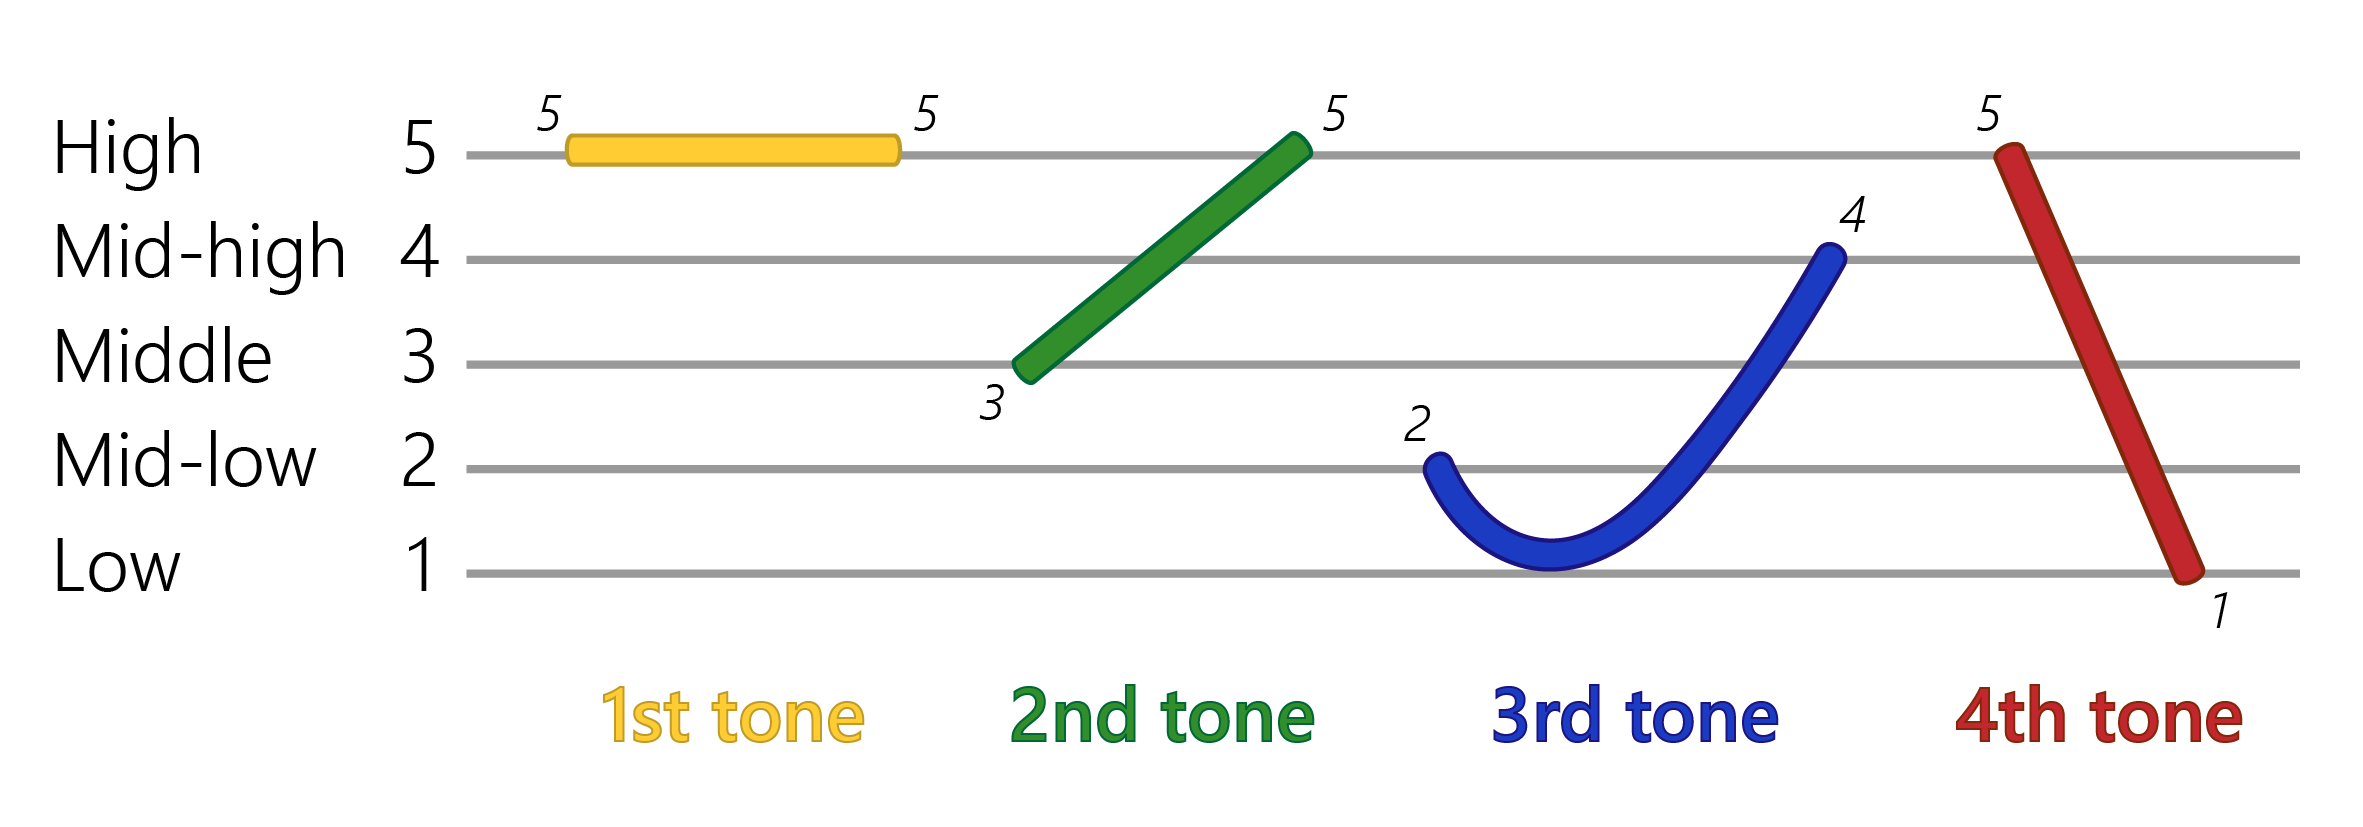 tone chart